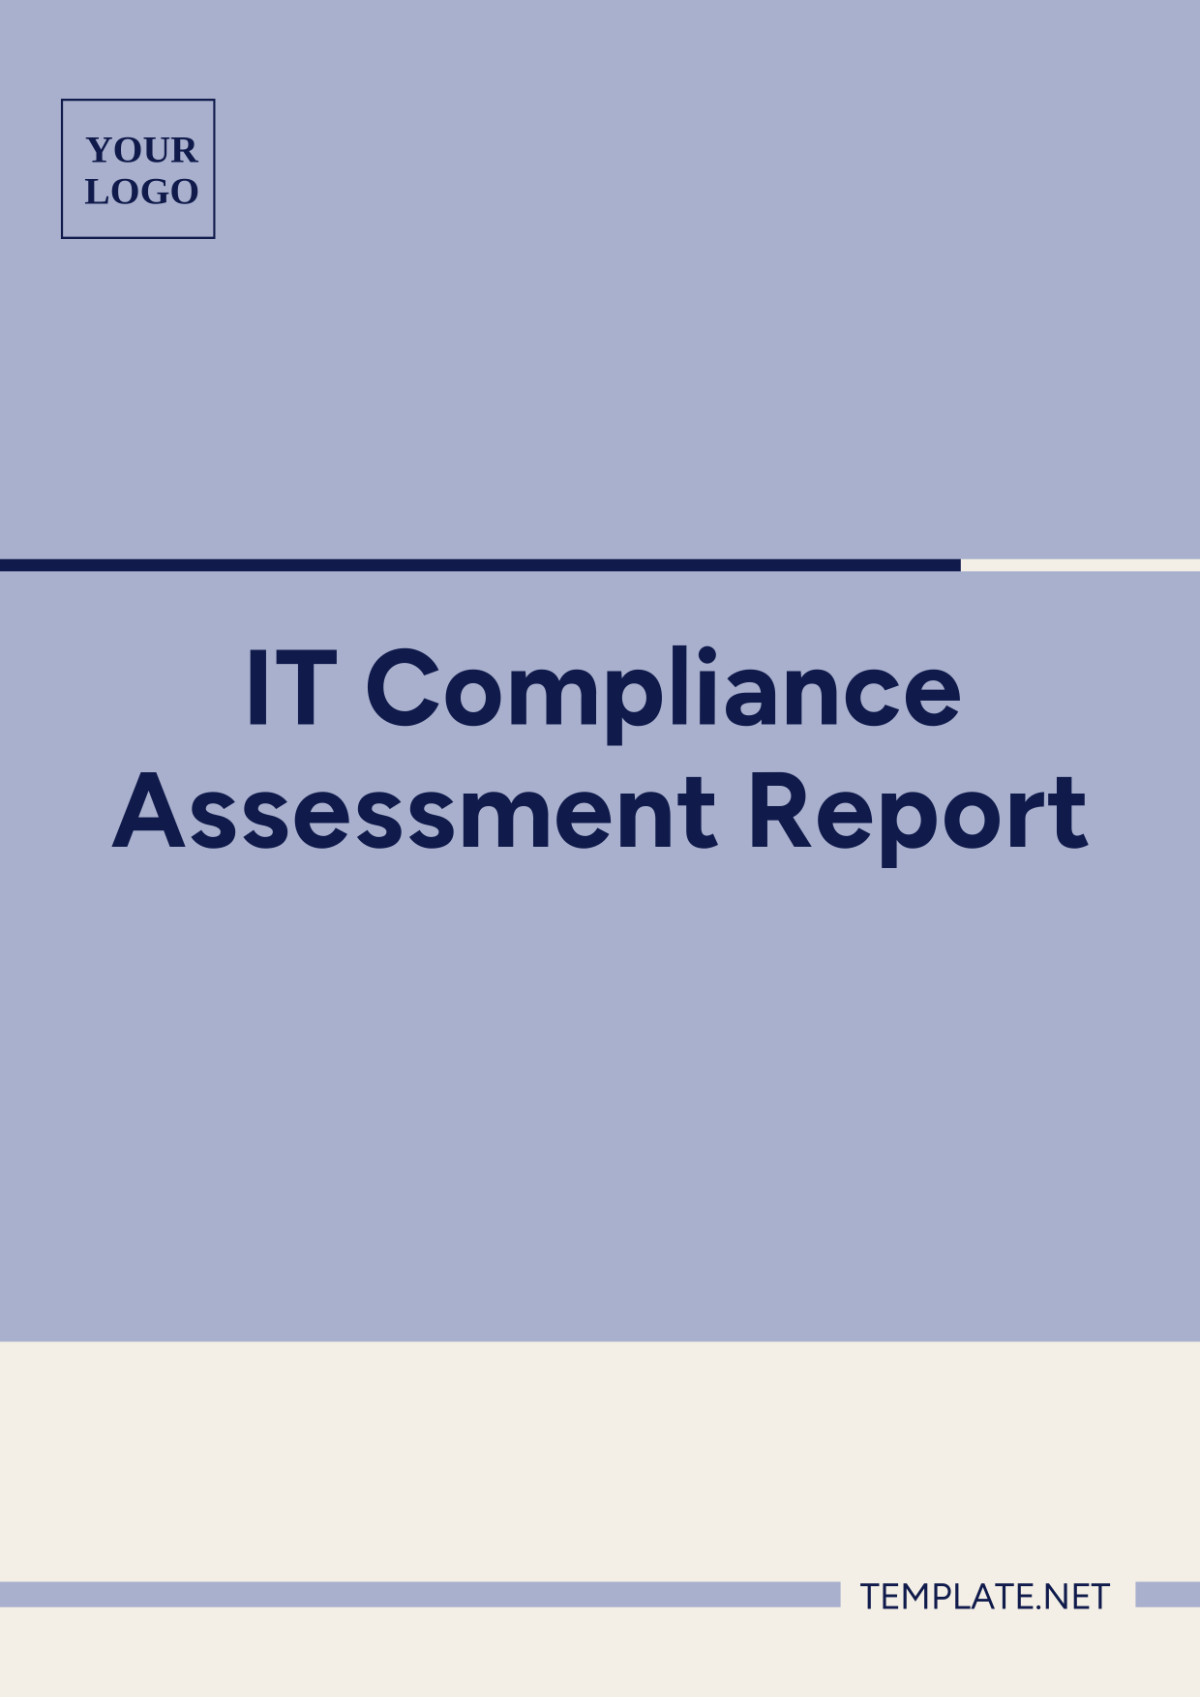 IT Compliance Assessment Report Template